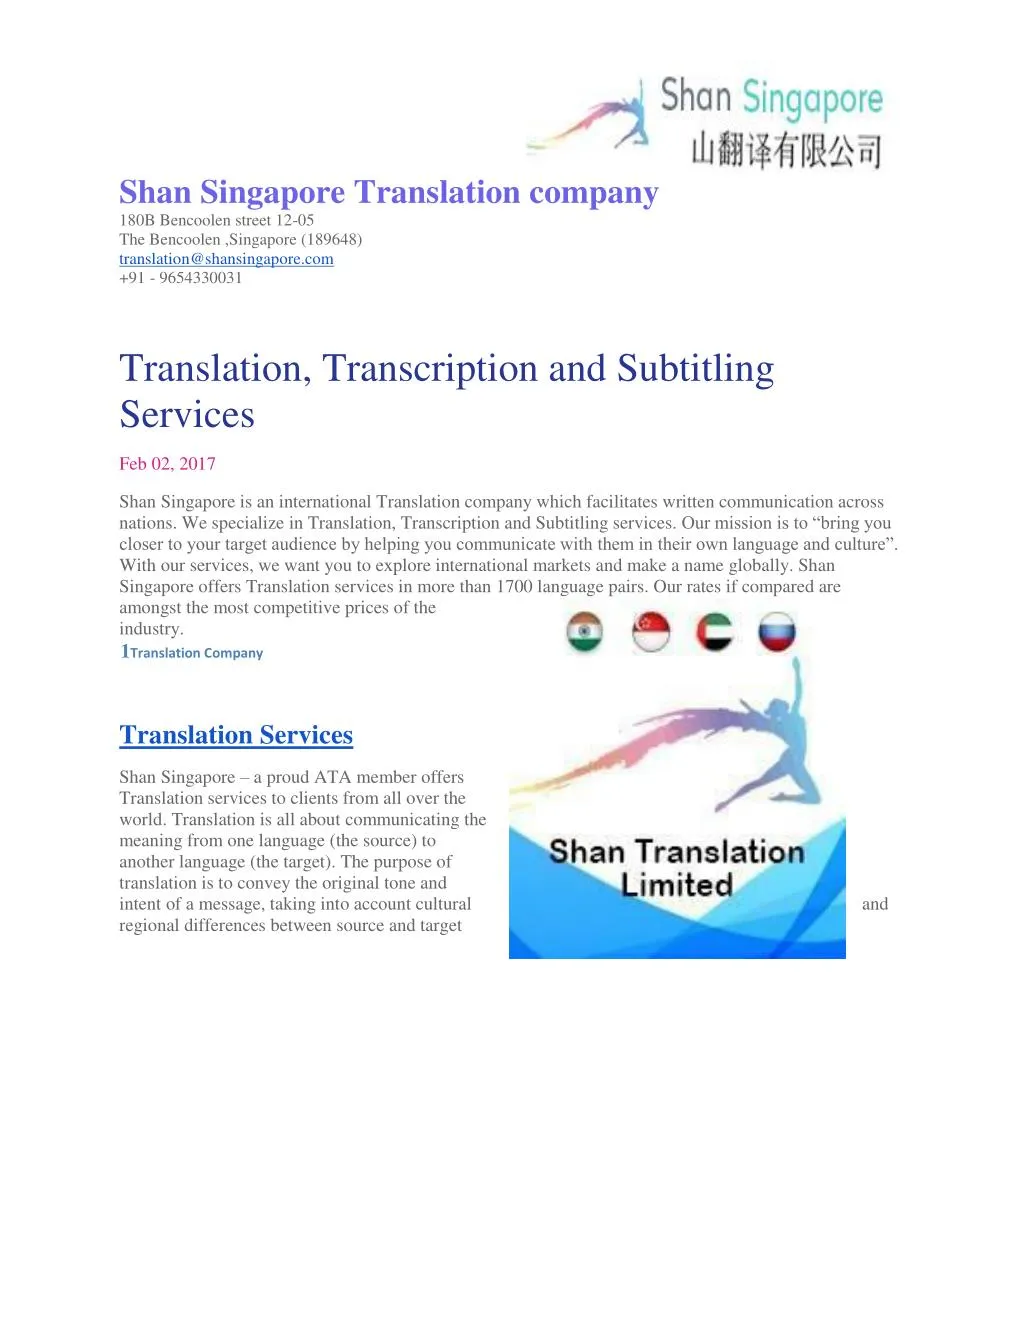 shan singapore translation company 180b bencoolen